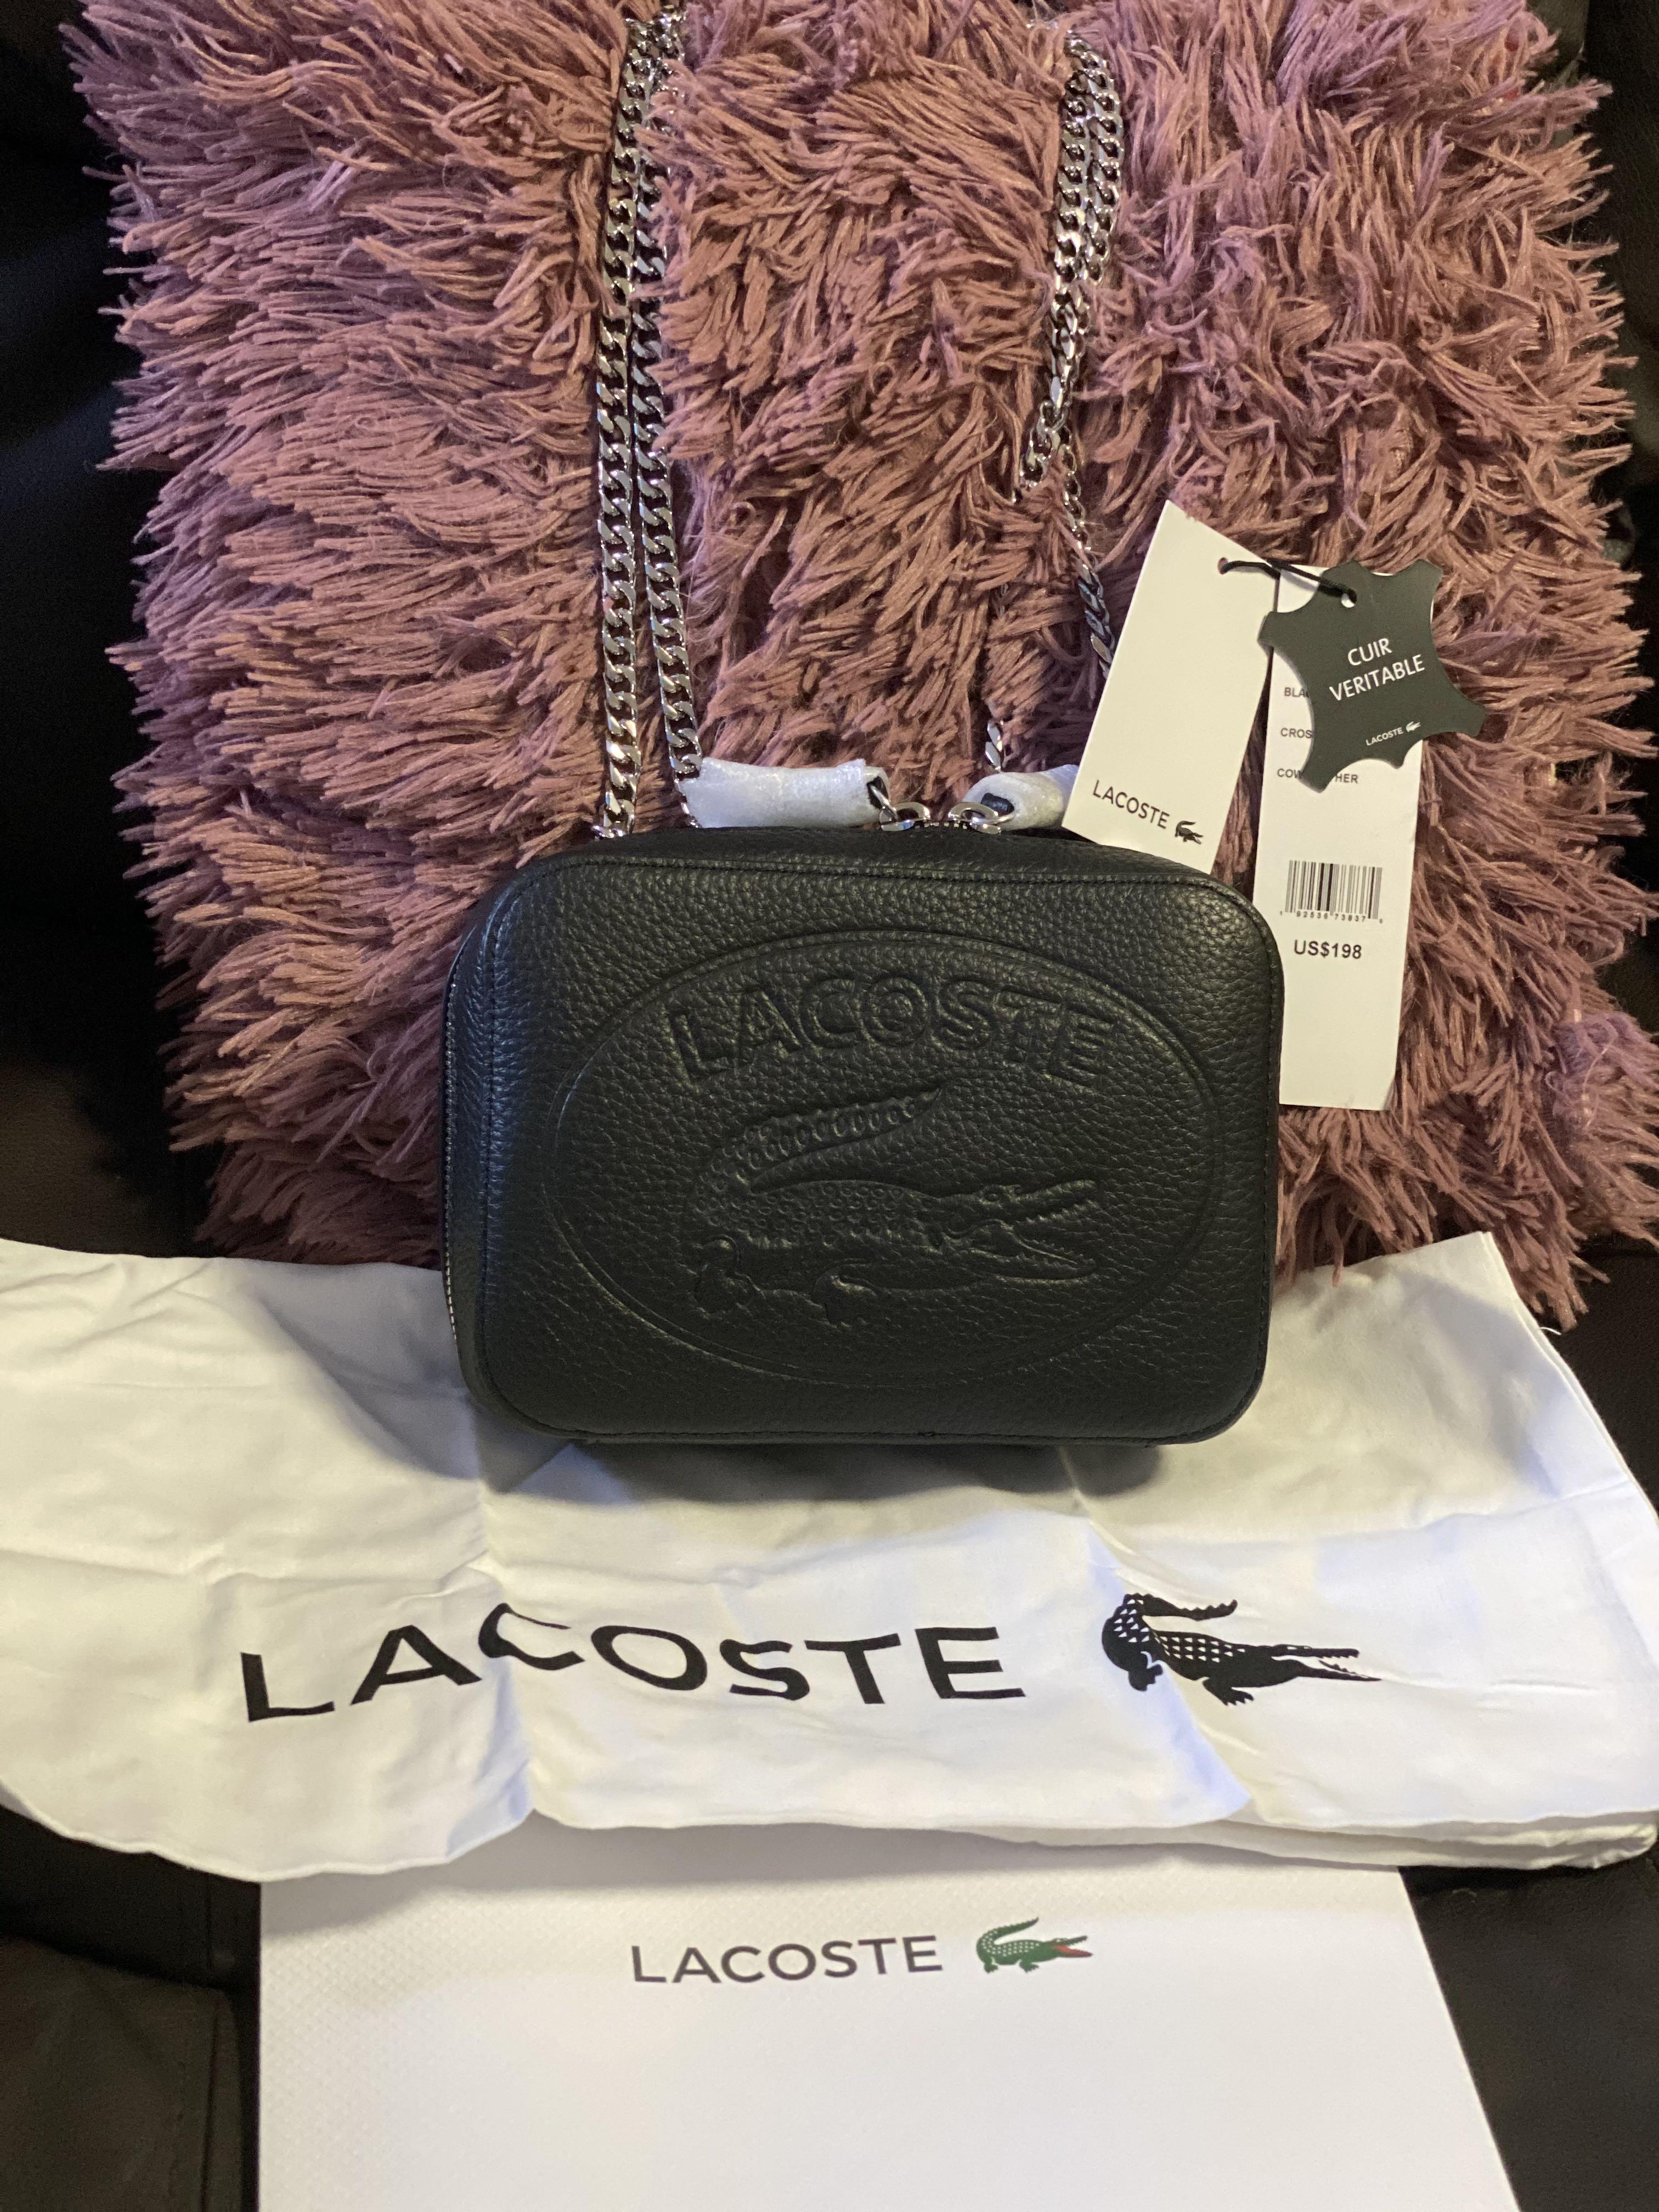 Lacoste Women's Croco Crew Small Shoulder Bag, Black, One Size US